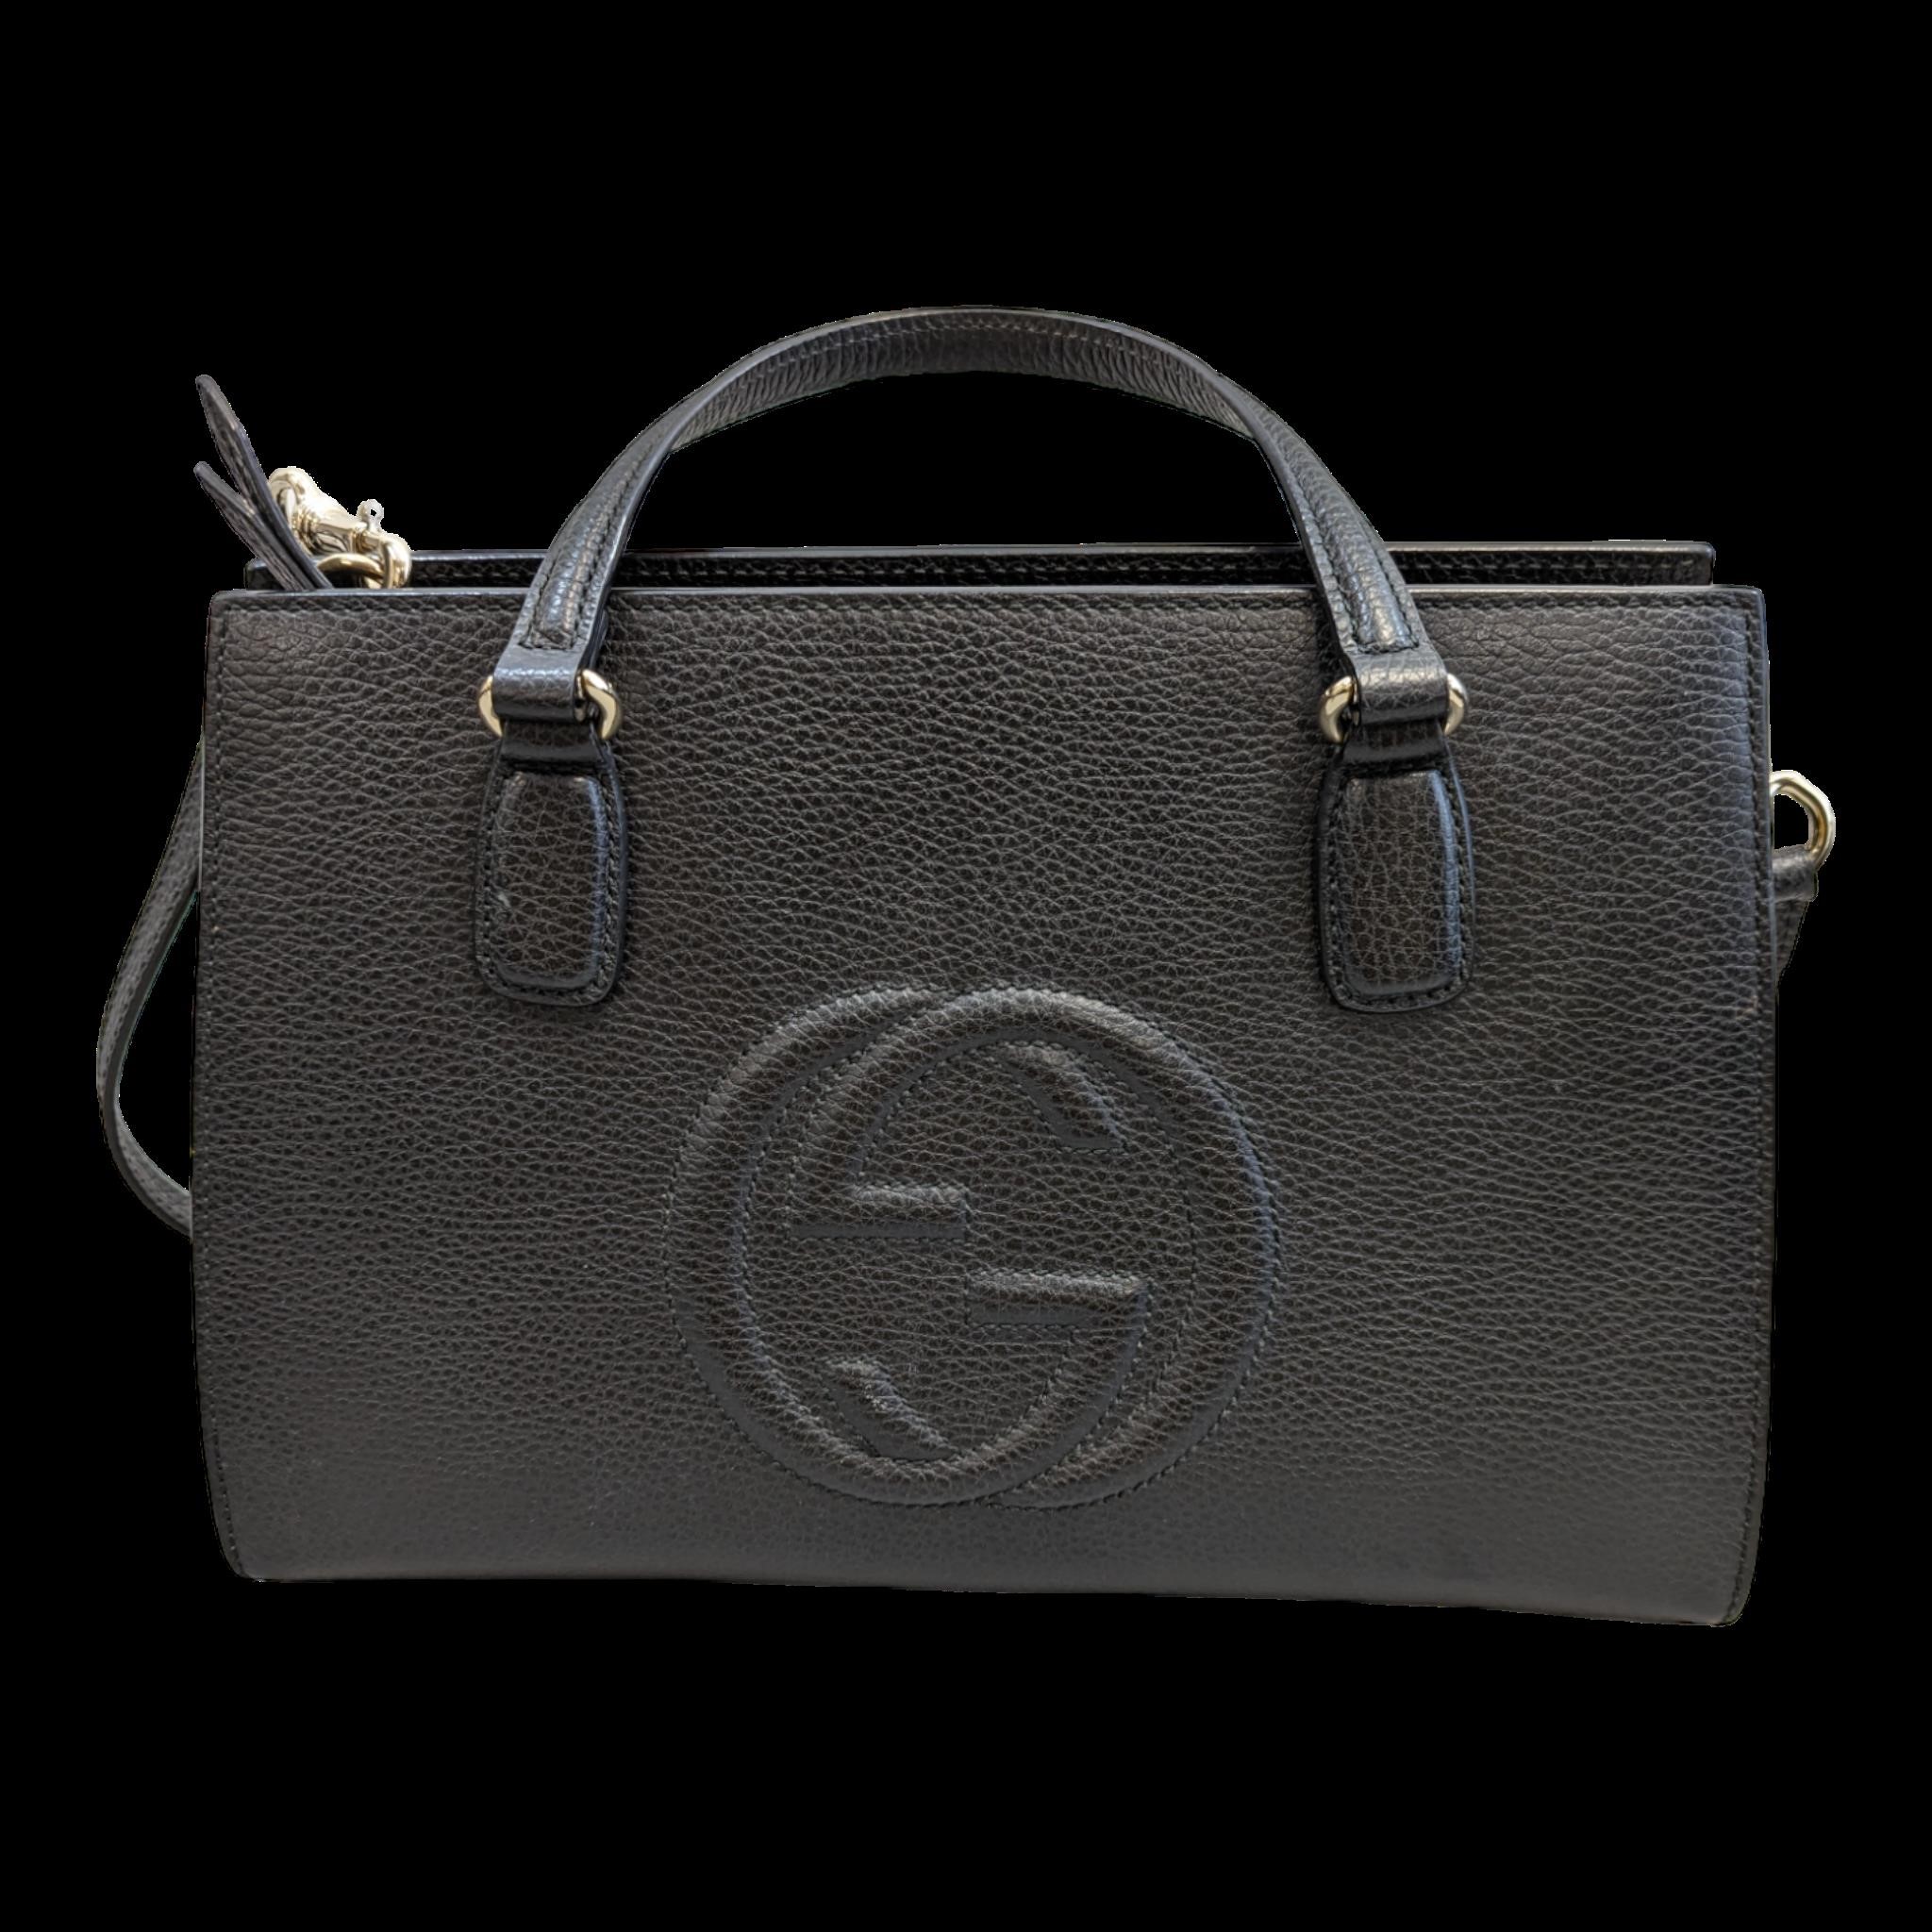 Gucci Soho Handbag leather